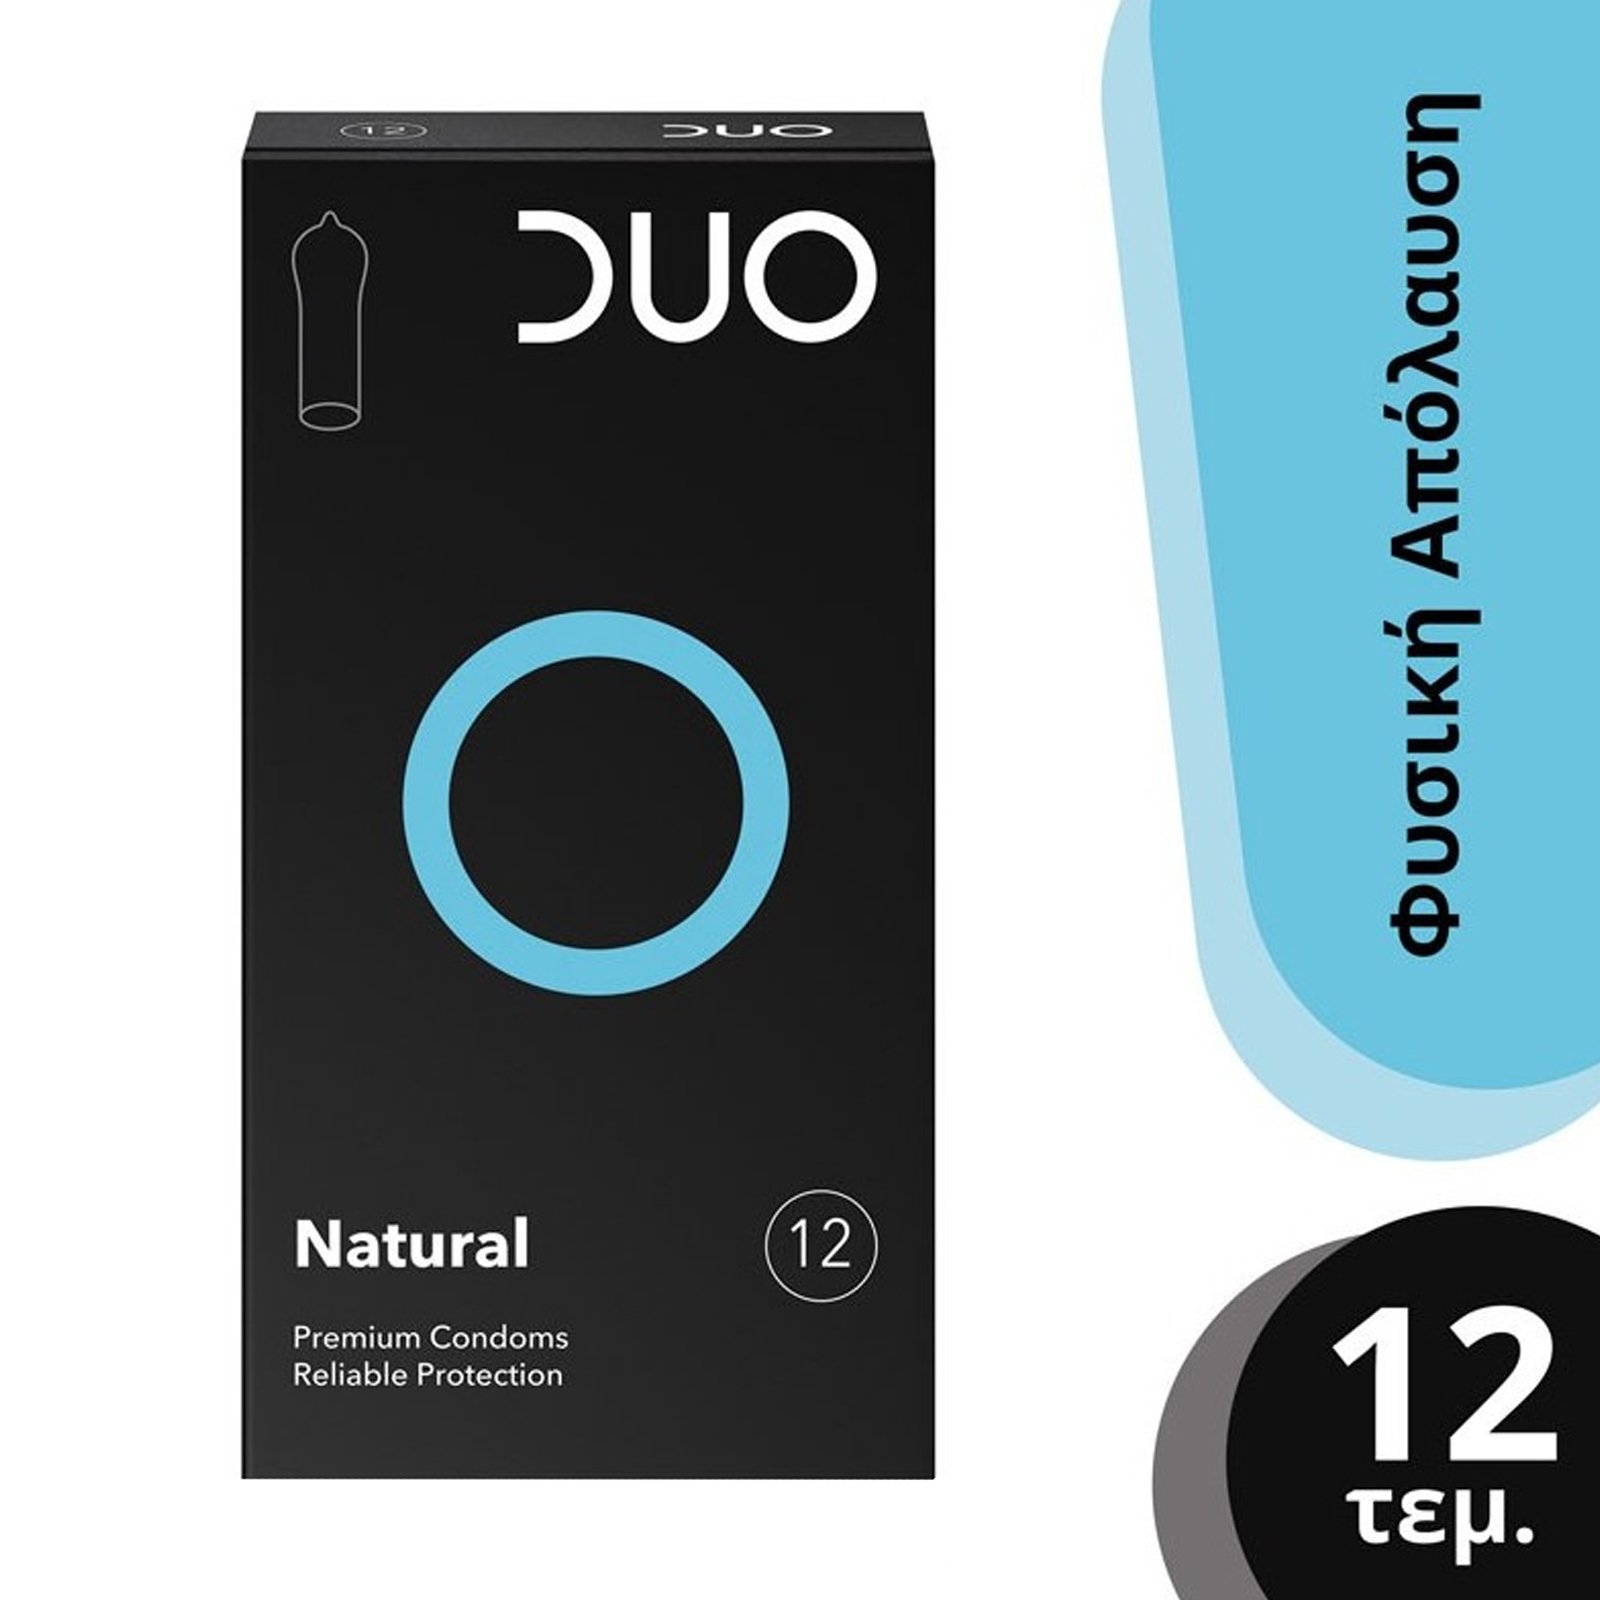 Duo Duo Natural Premium Condoms Φυσικό Προφυλακτικό για να Νιώθετε Ασφαλής σε Κάθε Περίσταση 12 Τεμάχια